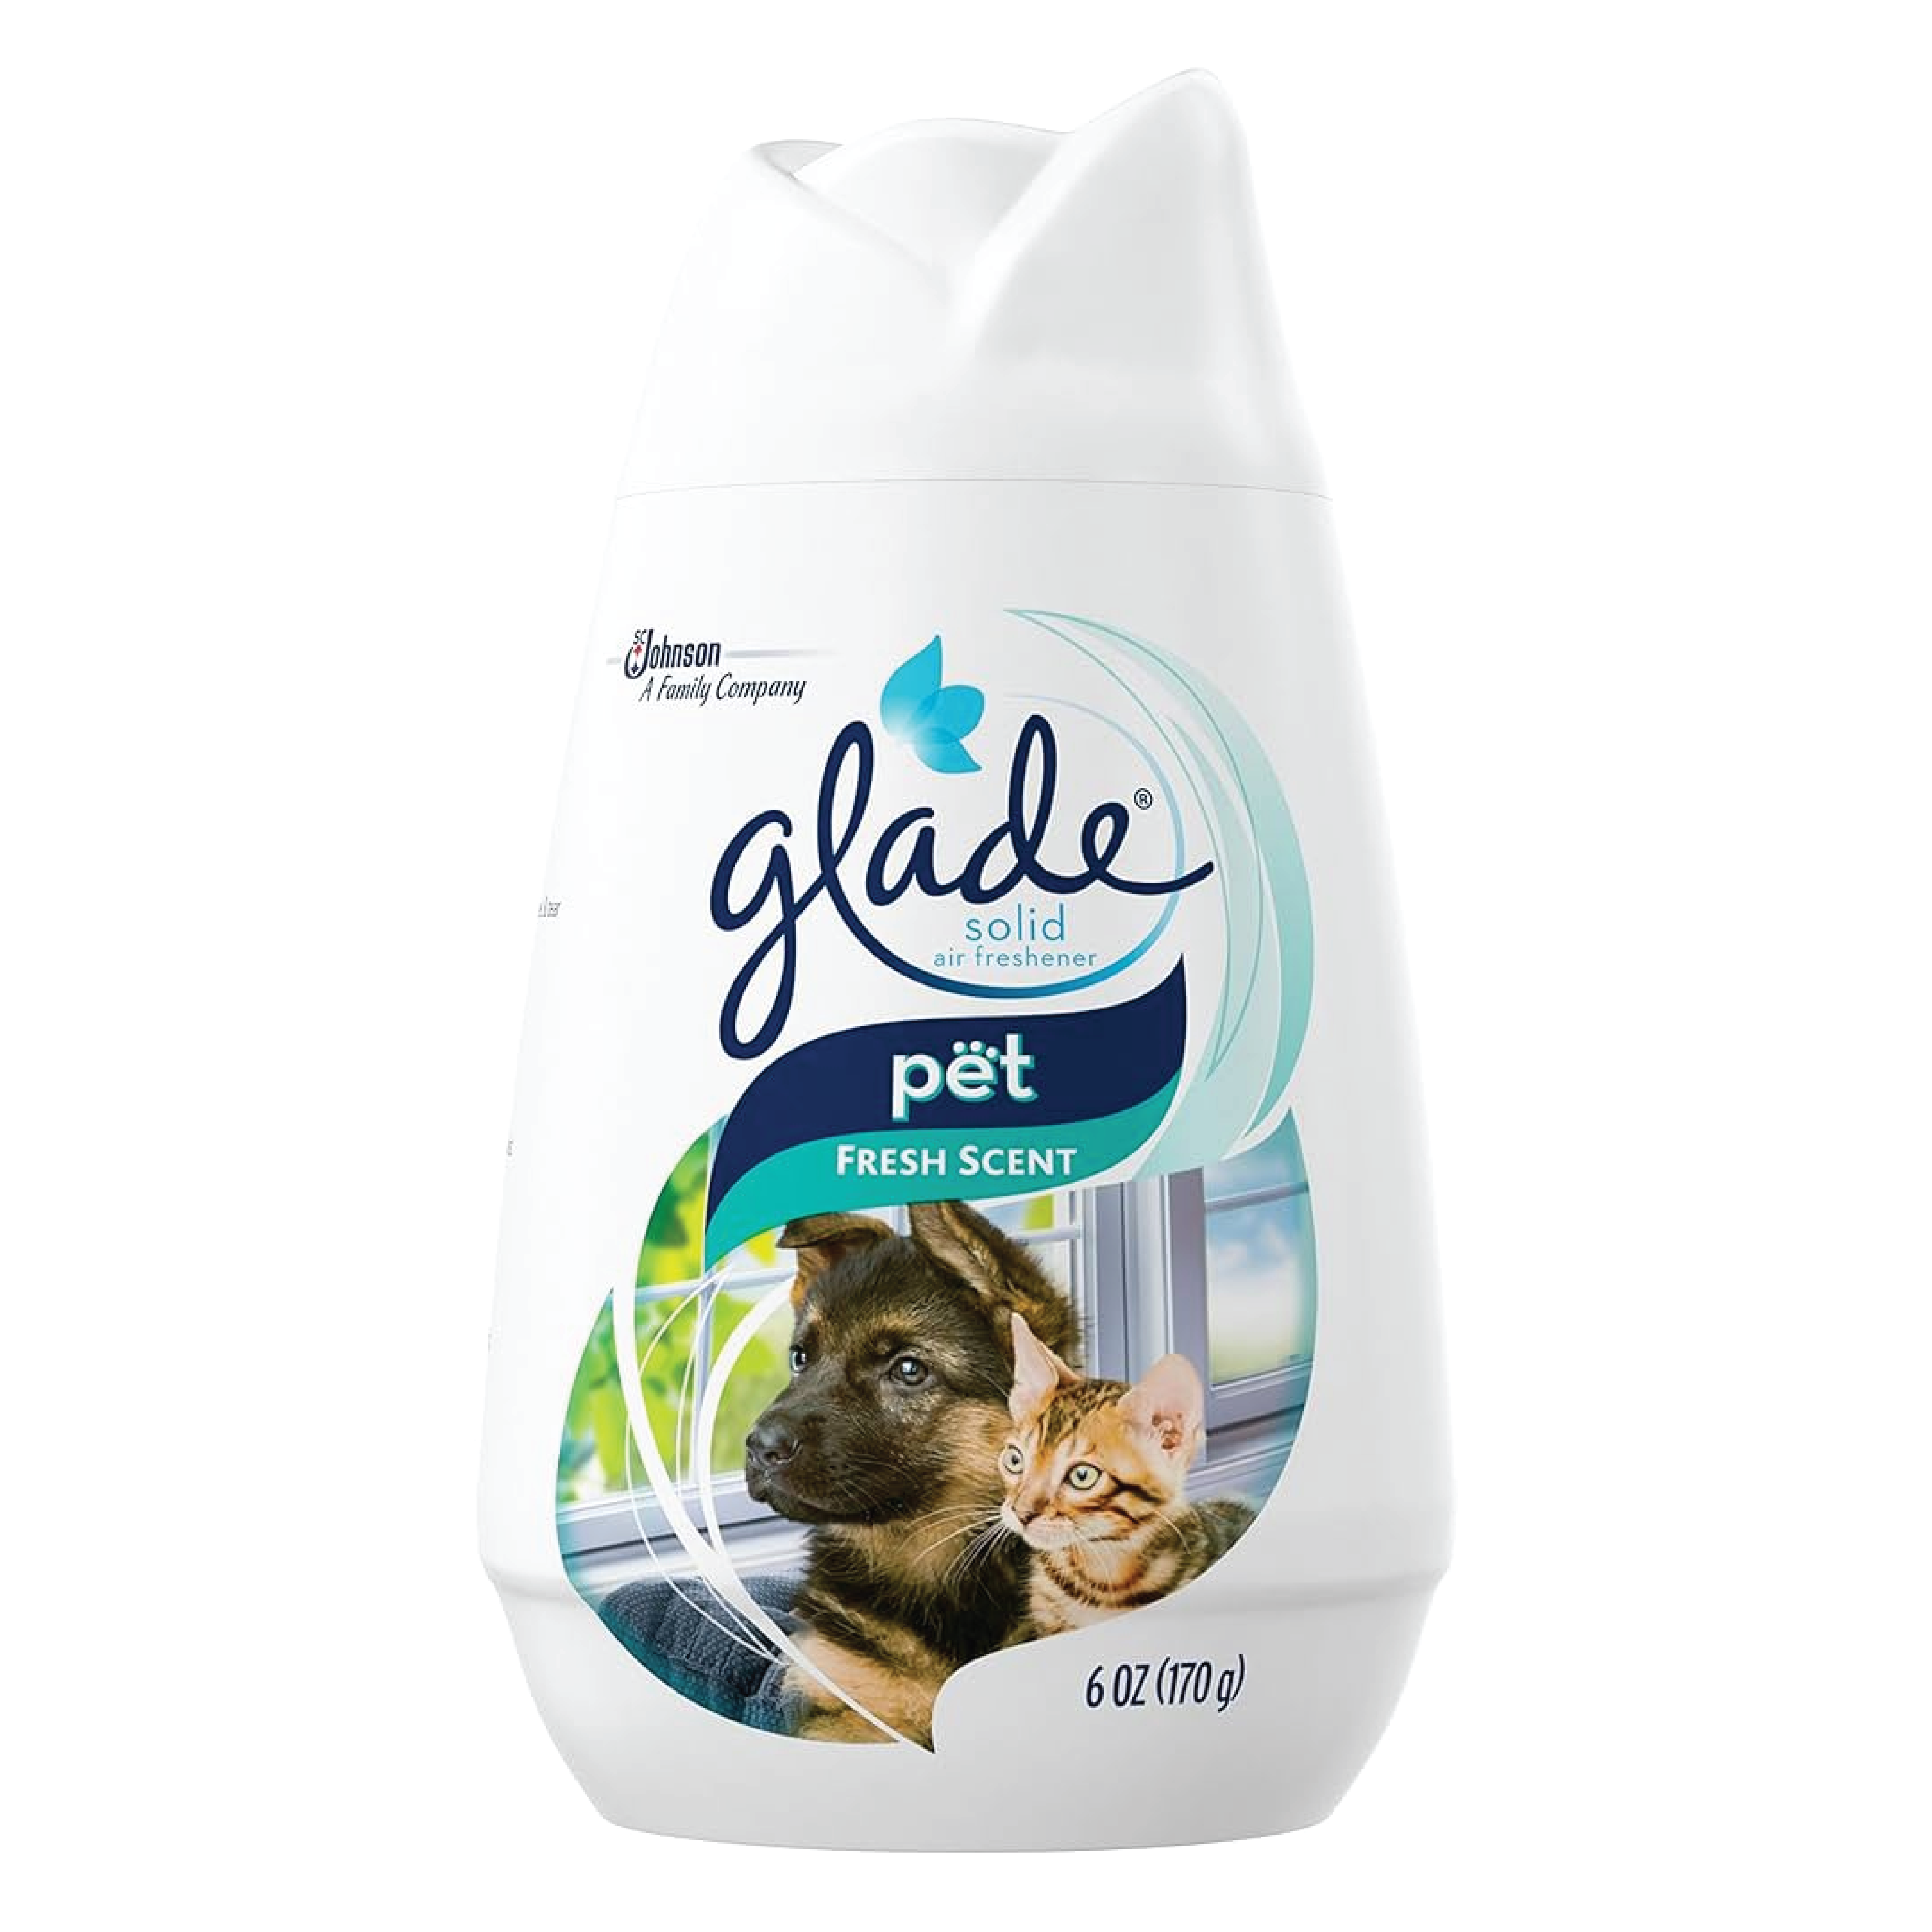 Glade Solid Pet Fresh Scent Air Freshener 6oz